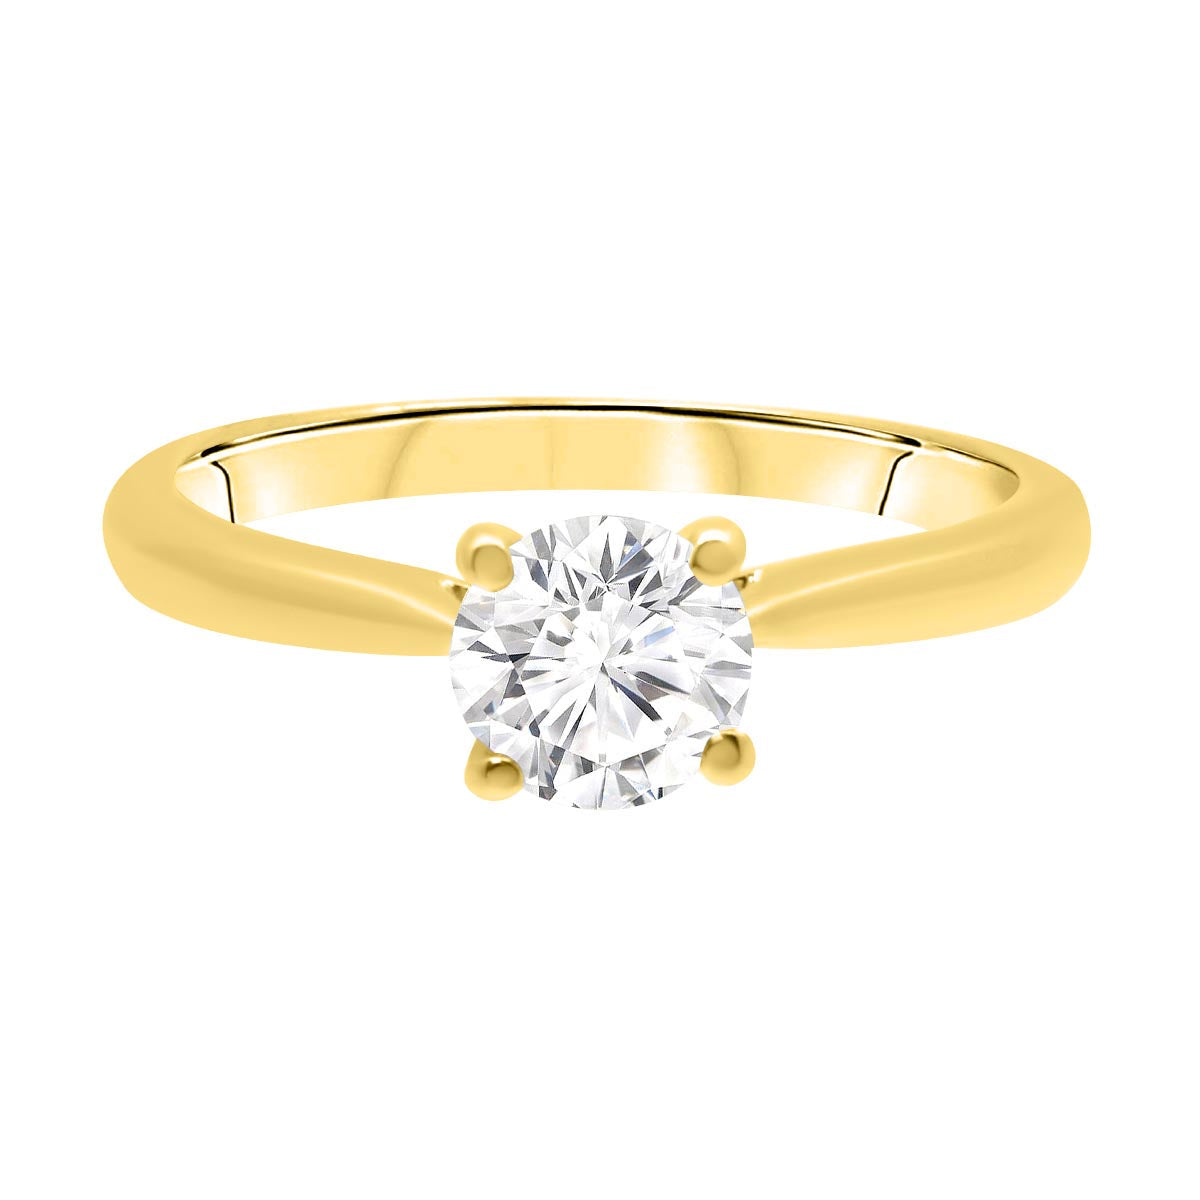 Hidden Diamond Detail engagement ring in yellow gold